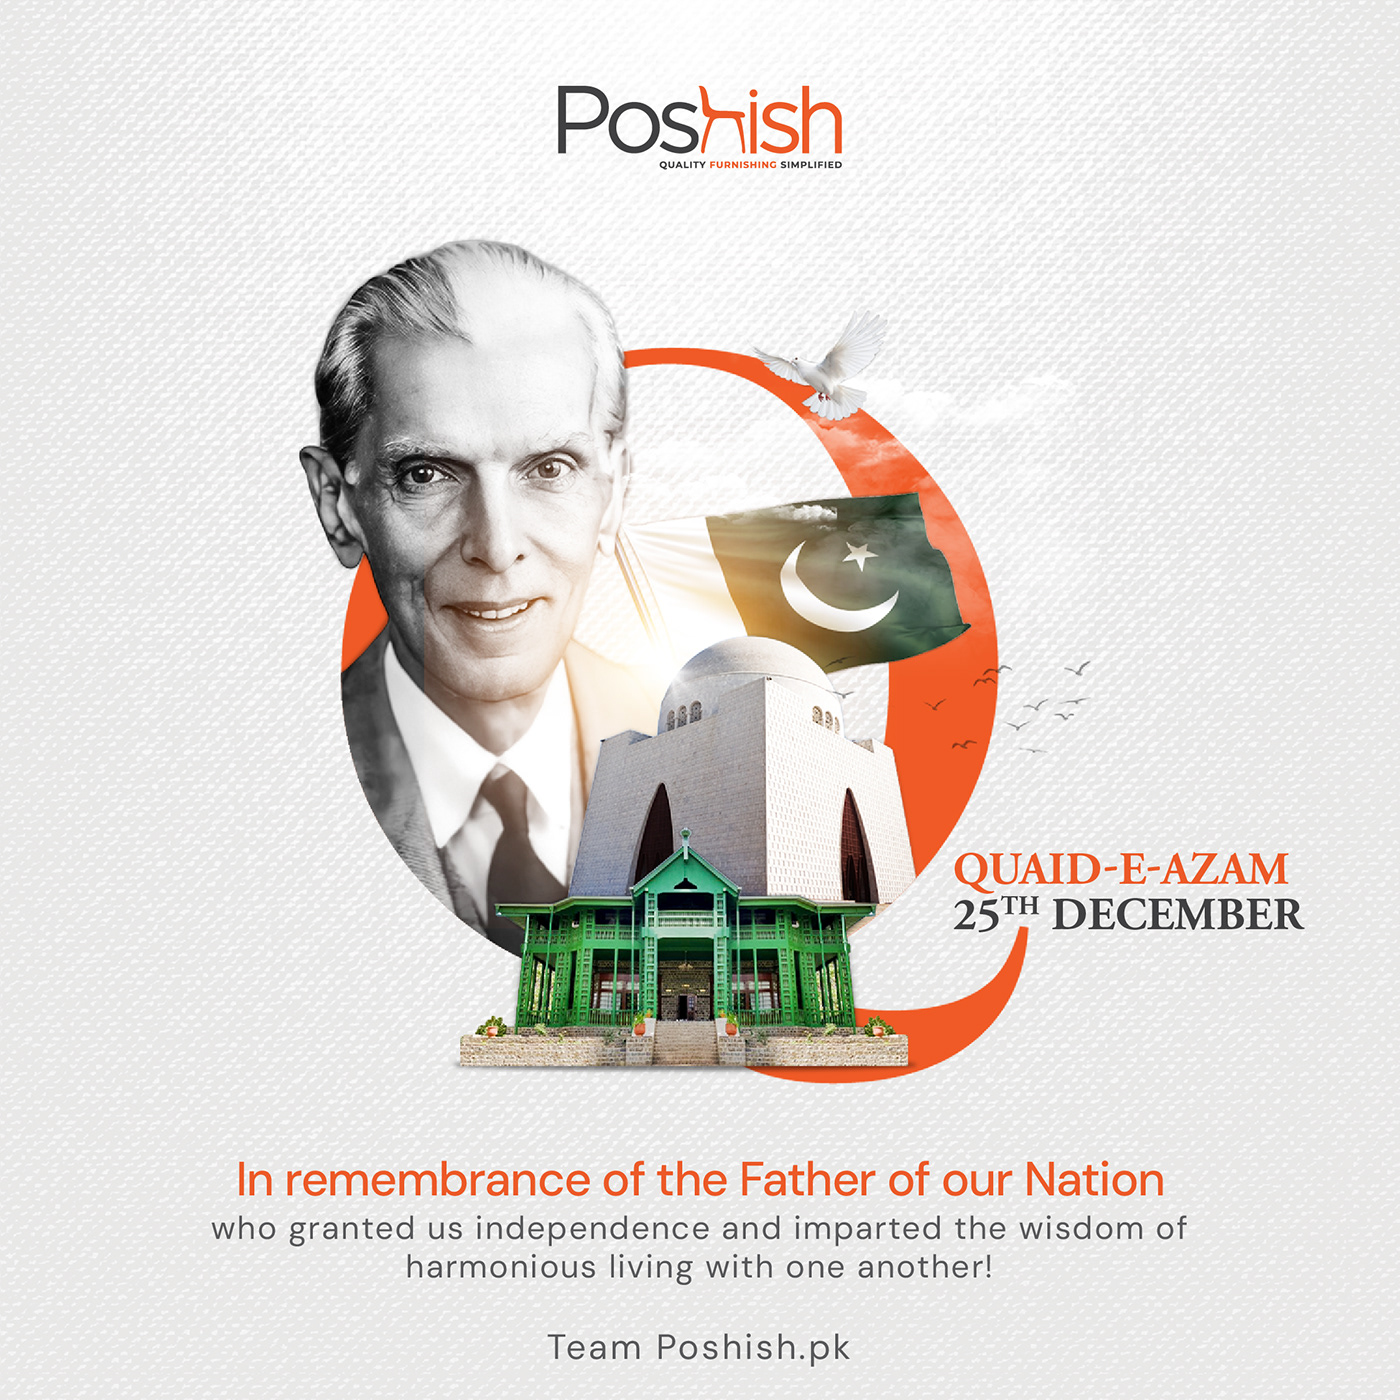 quaid e azam muhammad ali jinnah quaid day Founder of Pakistan Jinnah Social media post marketing   quaid e azam day 25 december Pakistan